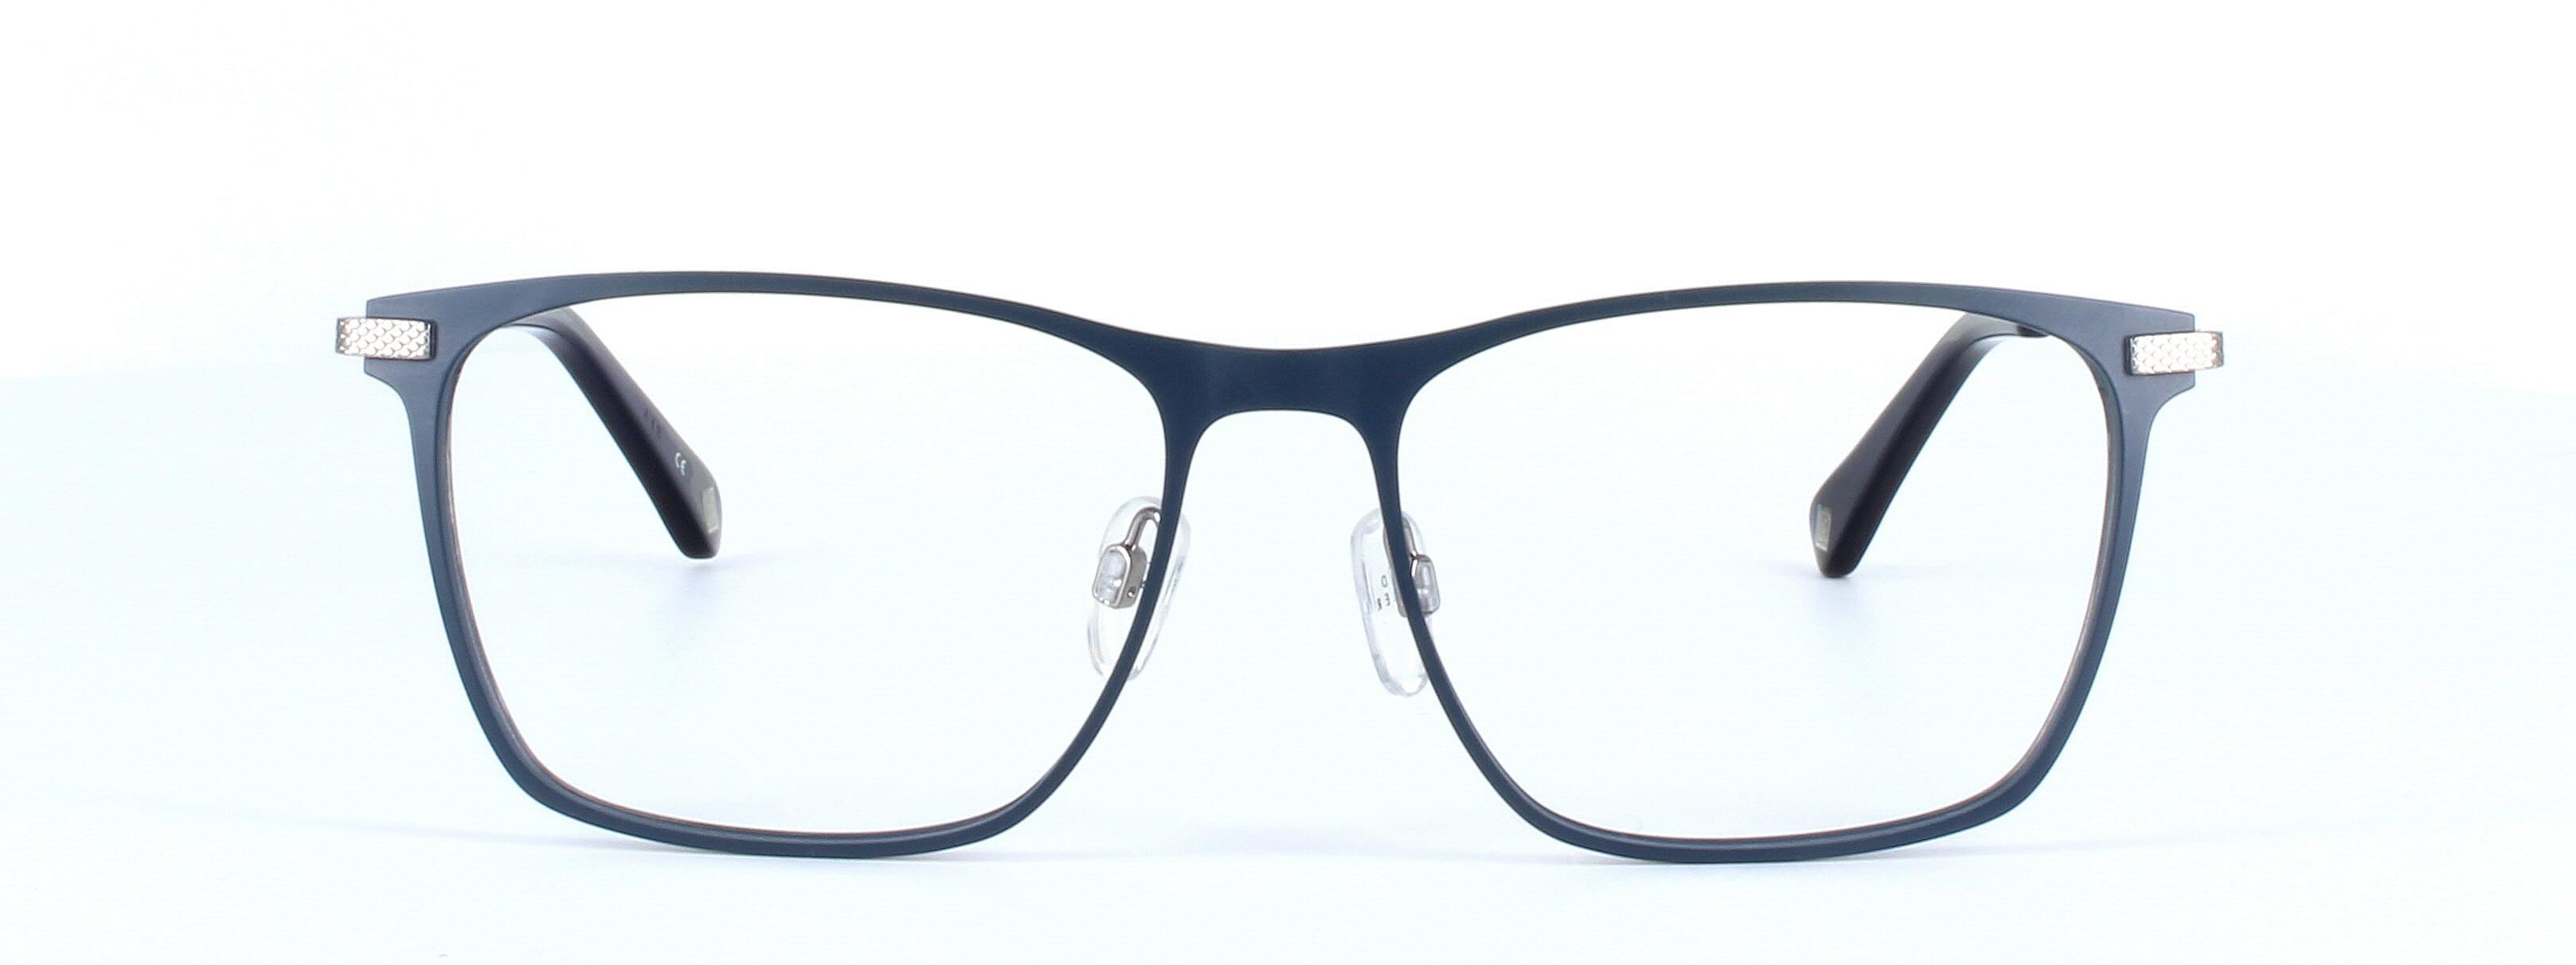 Ted Baker 4276 - Unisex designer metal glasses frame - blue and silver - image view 5